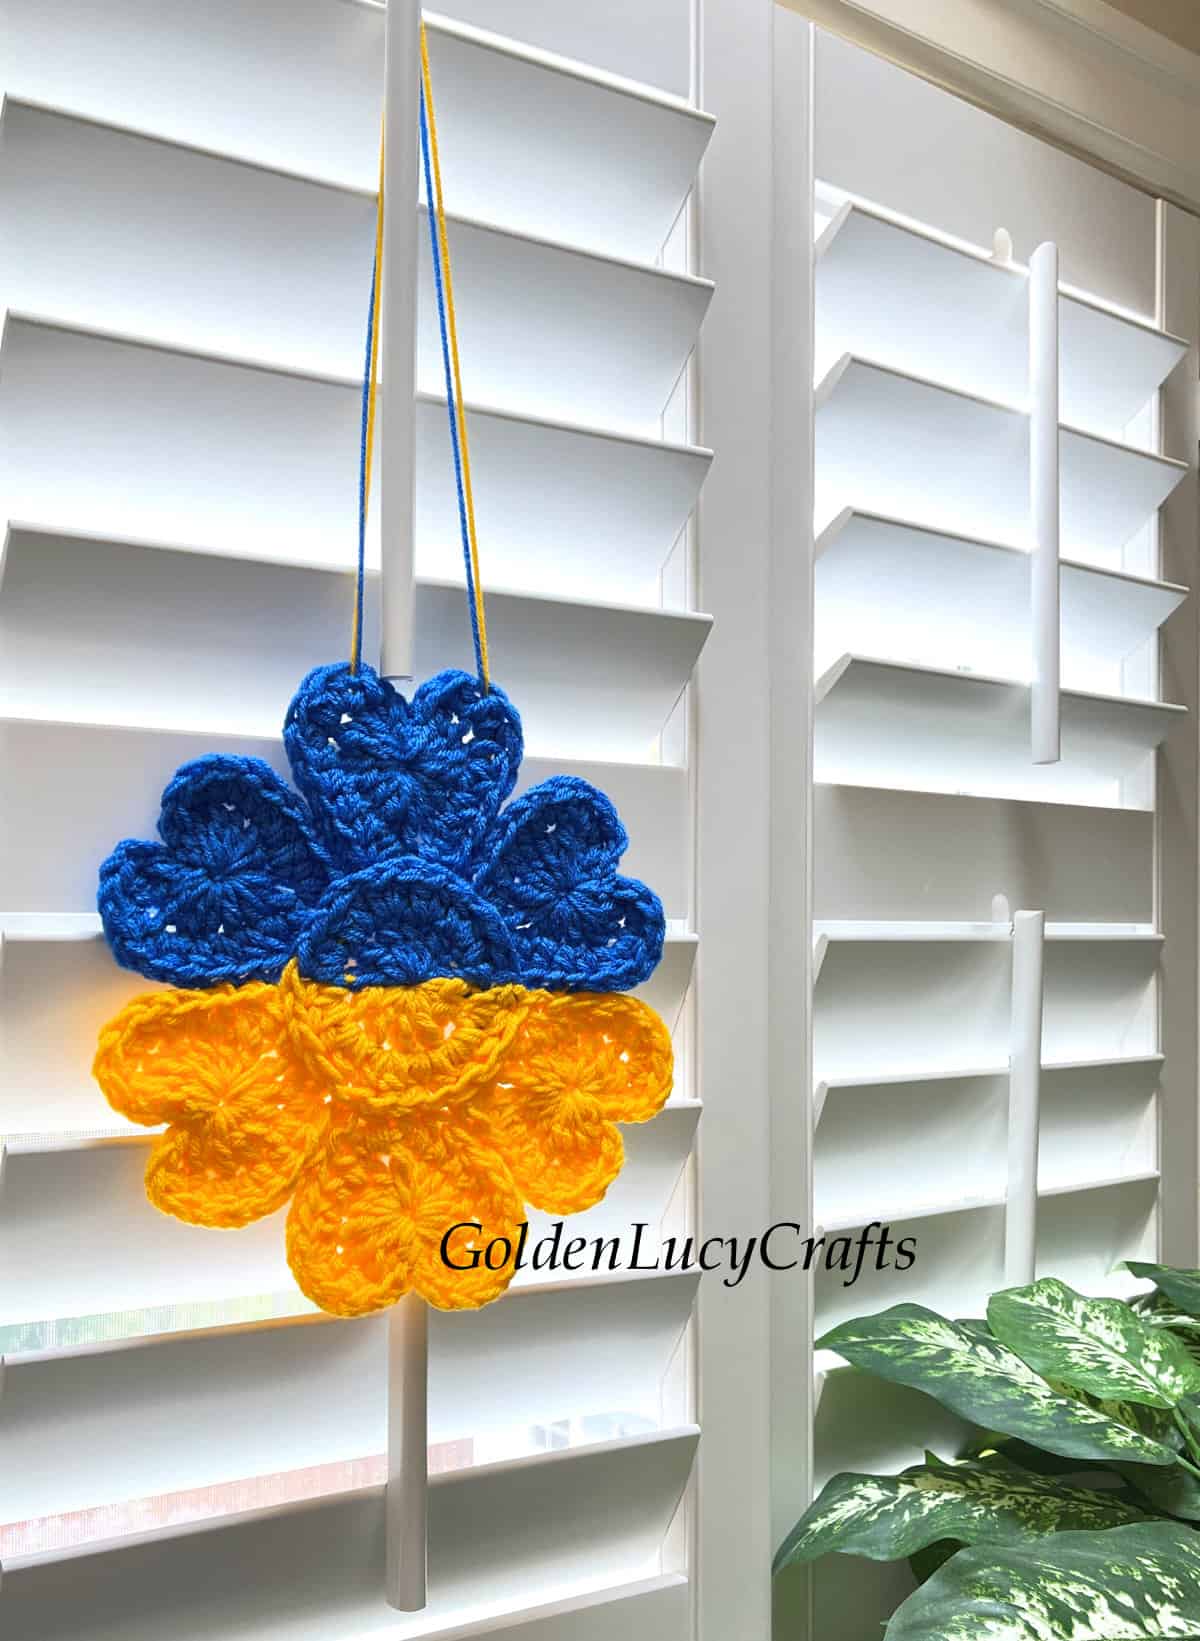 Crochet Ukrainian sunflower hanging on the window.